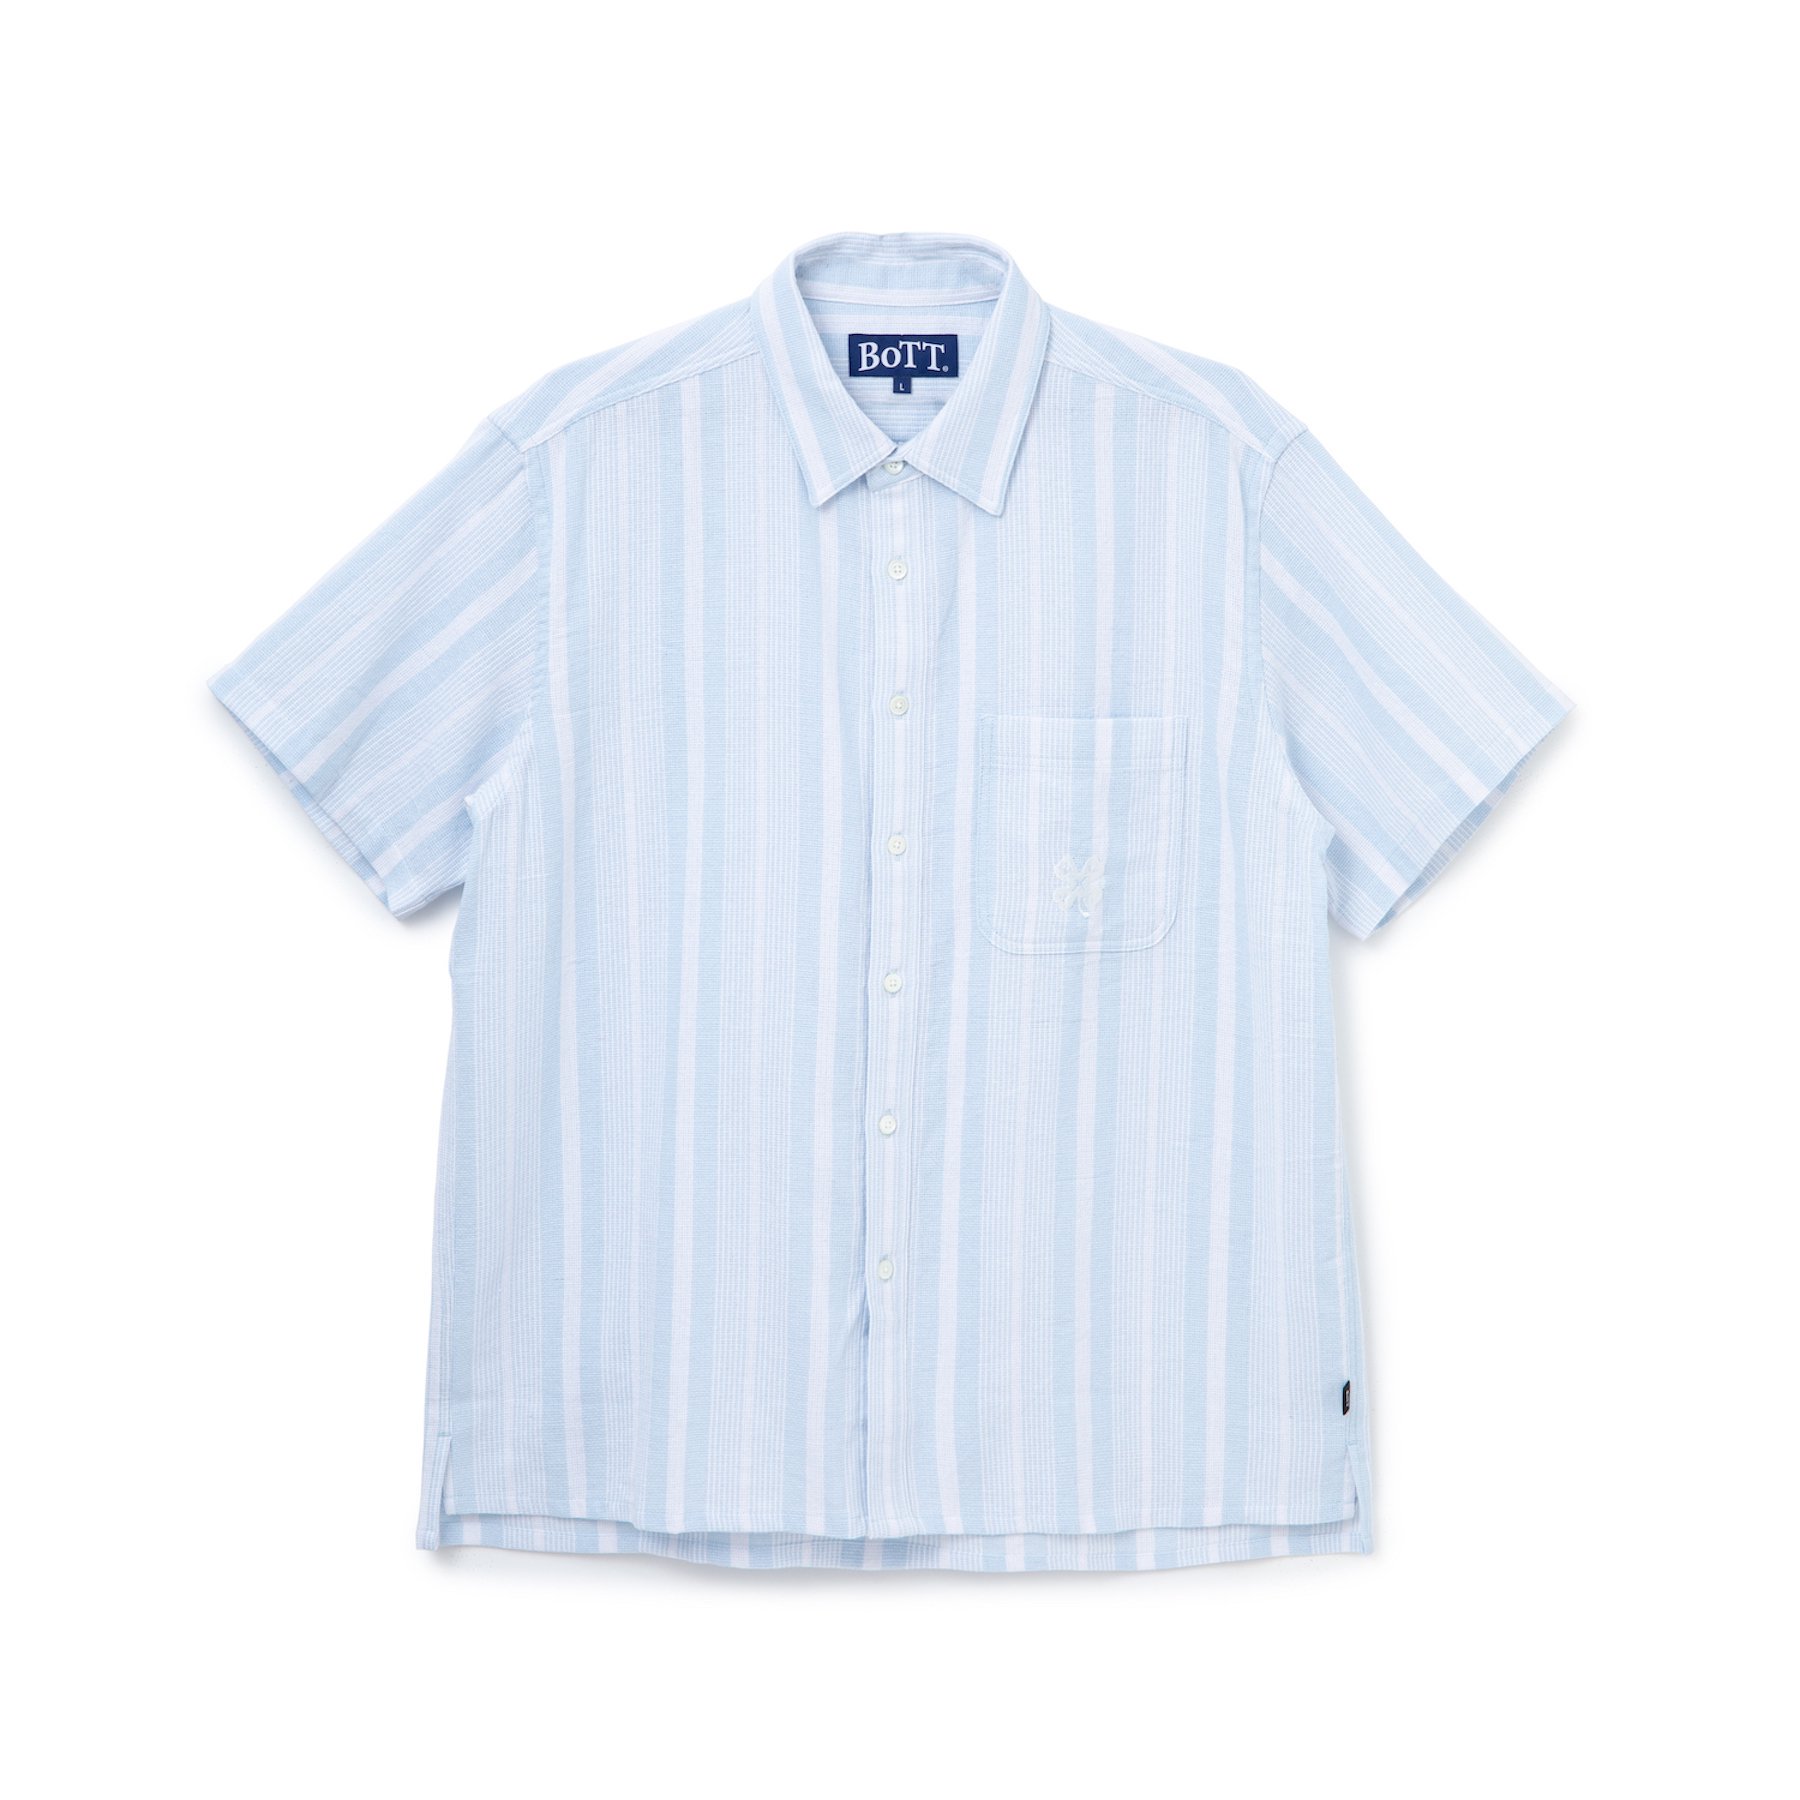 BoTT<br>Jacquard Stripe S/S Shirt<br>